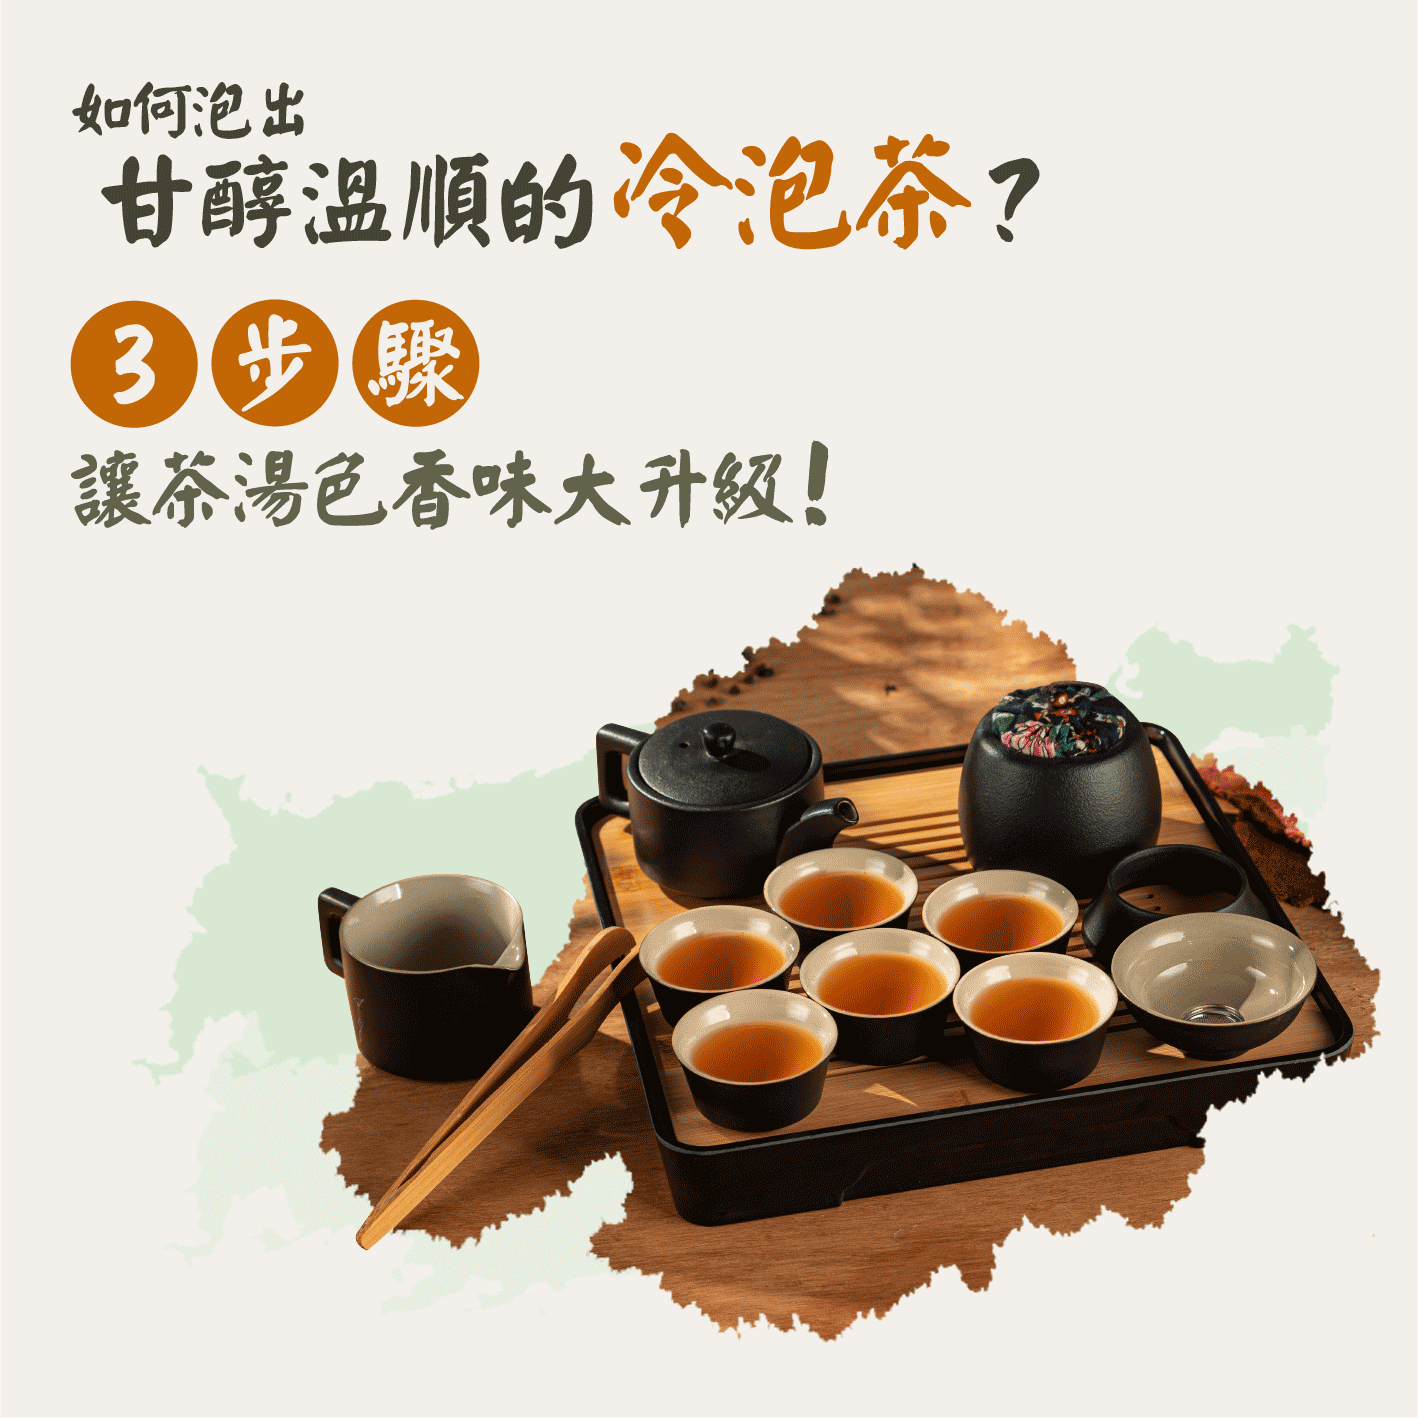 Read more about the article 如何泡出甘醇溫順的冷泡茶？3步驟讓茶湯色香味大升級！